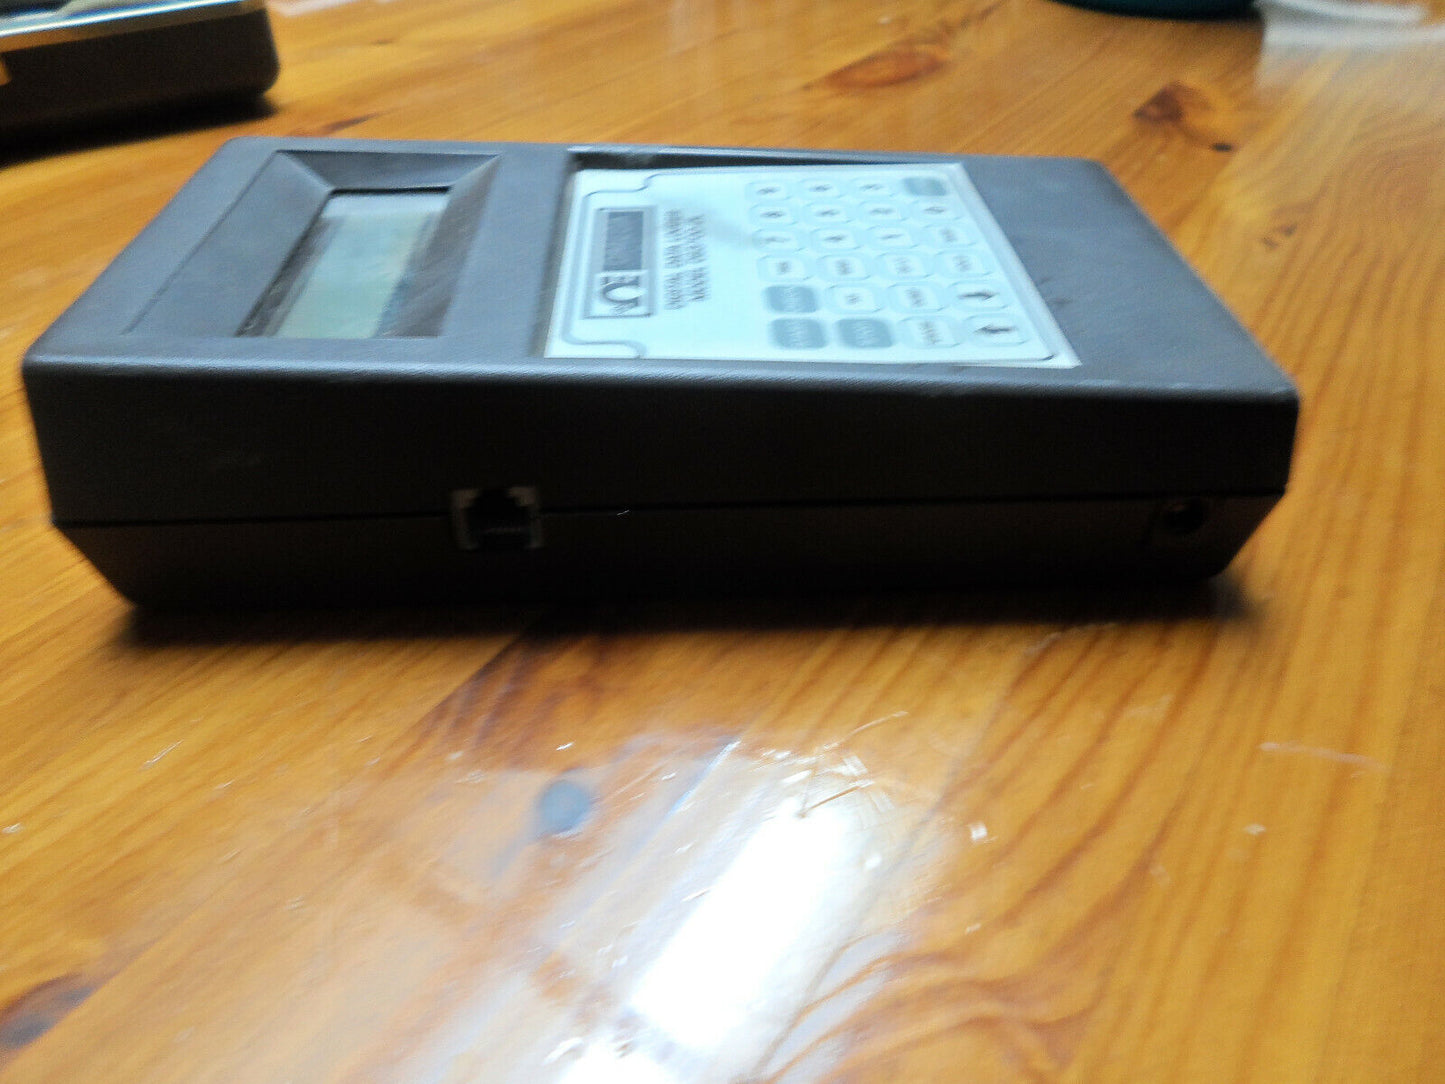 Omega OS3700-DL Portable Handheld Analog / Digital Datalogger